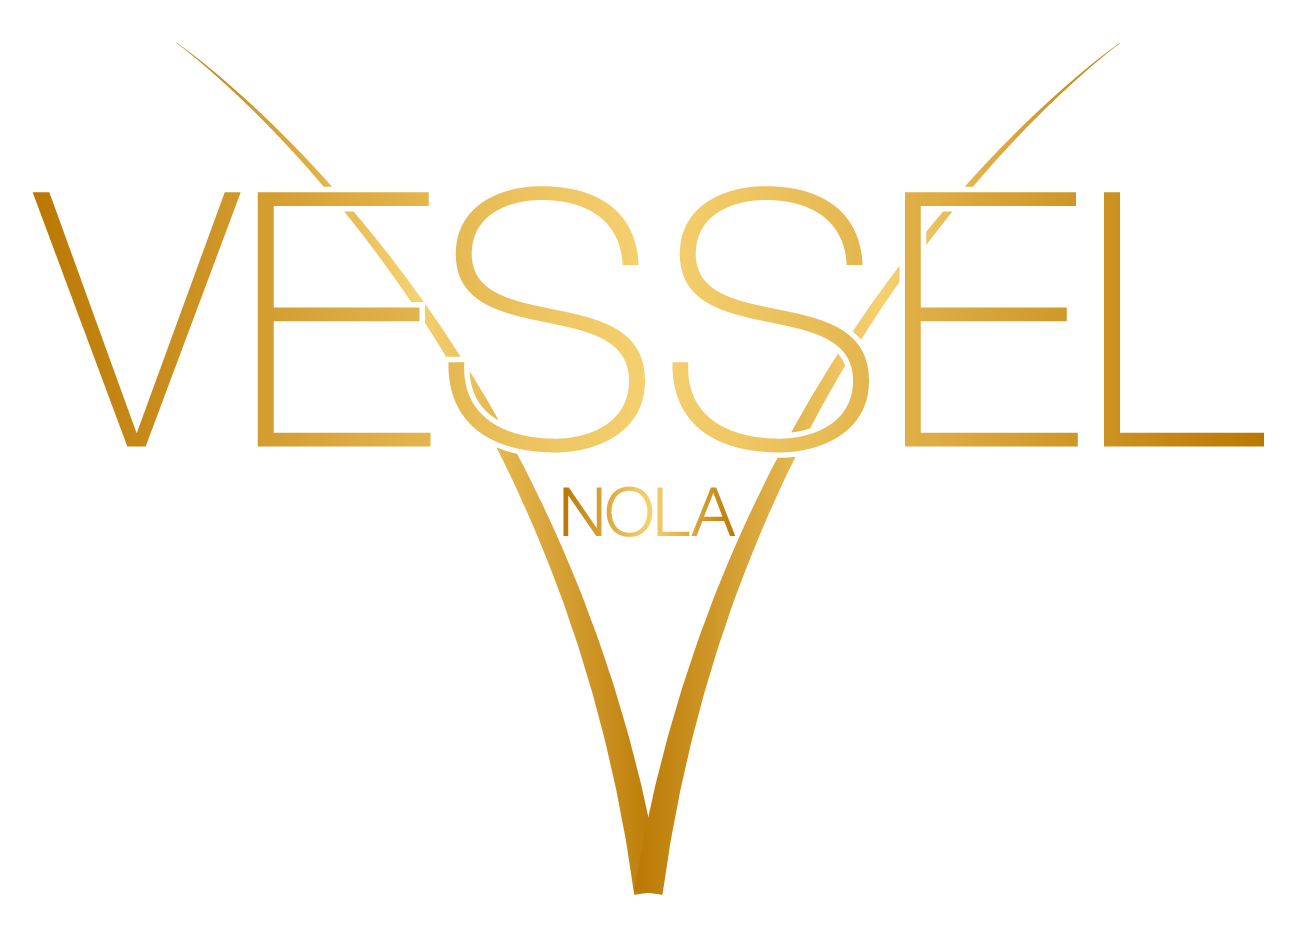 vesselnola.com